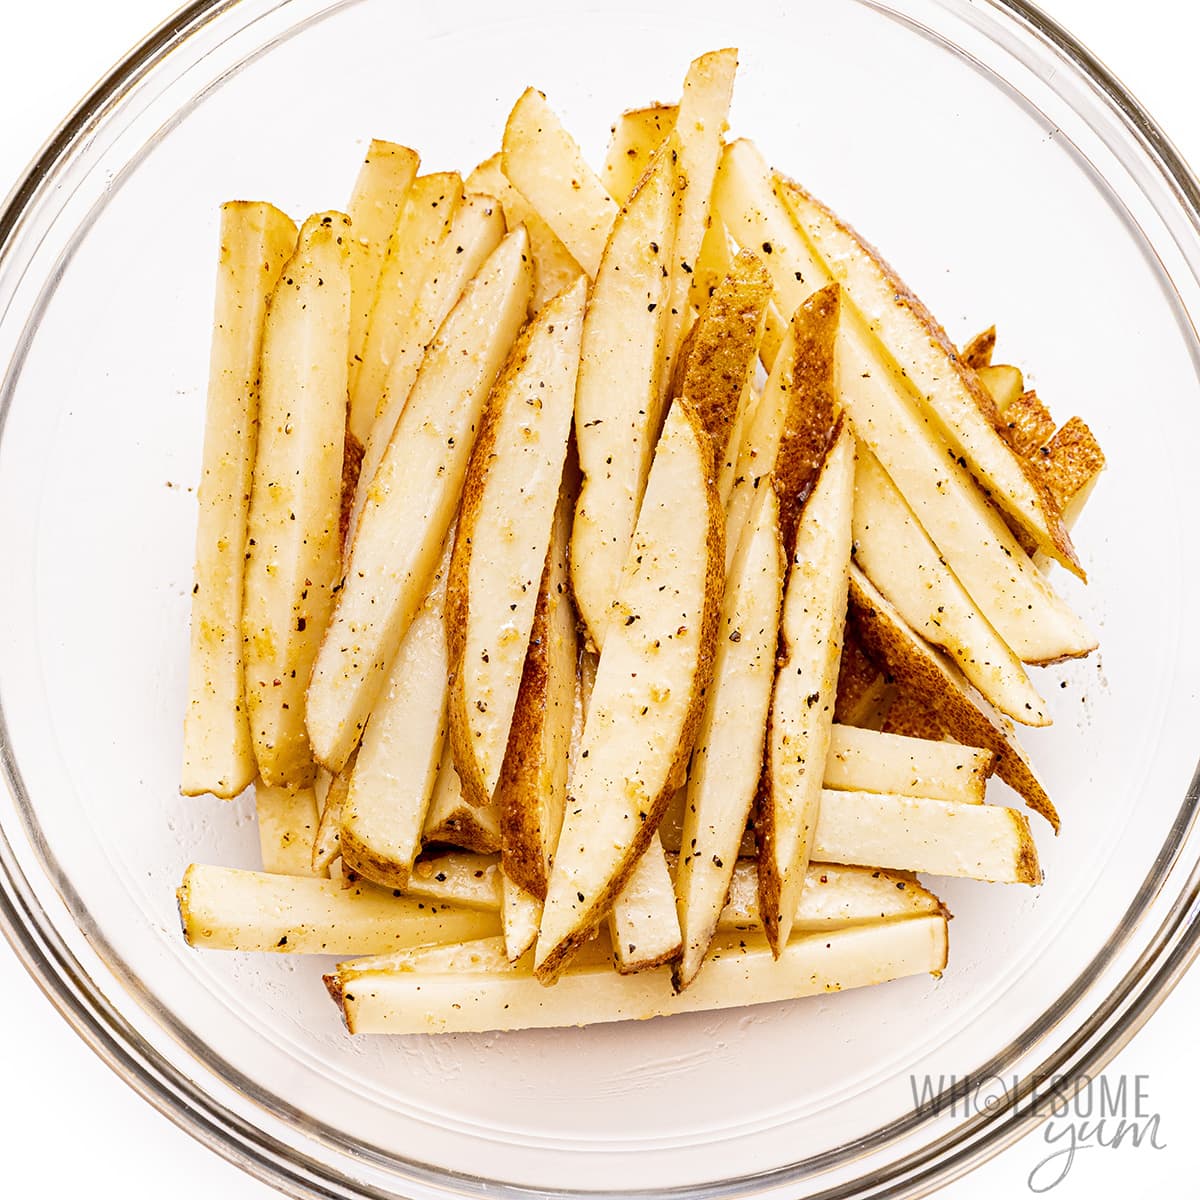 Potato sticks seasoned with garlic powder, salt, and pepper in a bowl.